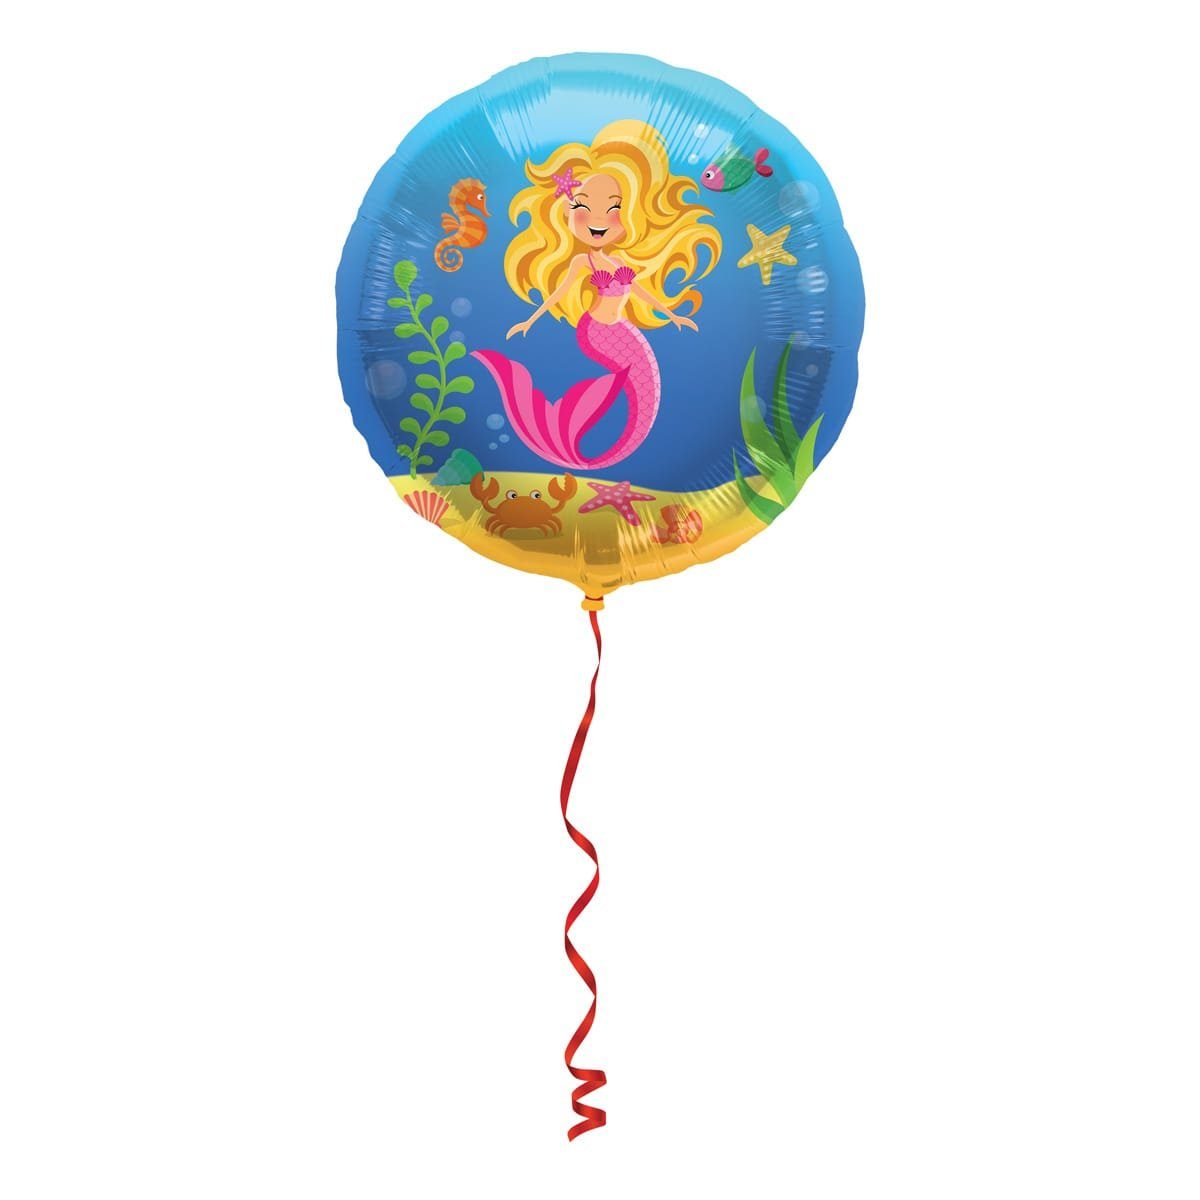 Folat Folienballon Folienballon rund - Meerjungfrau - 45cm